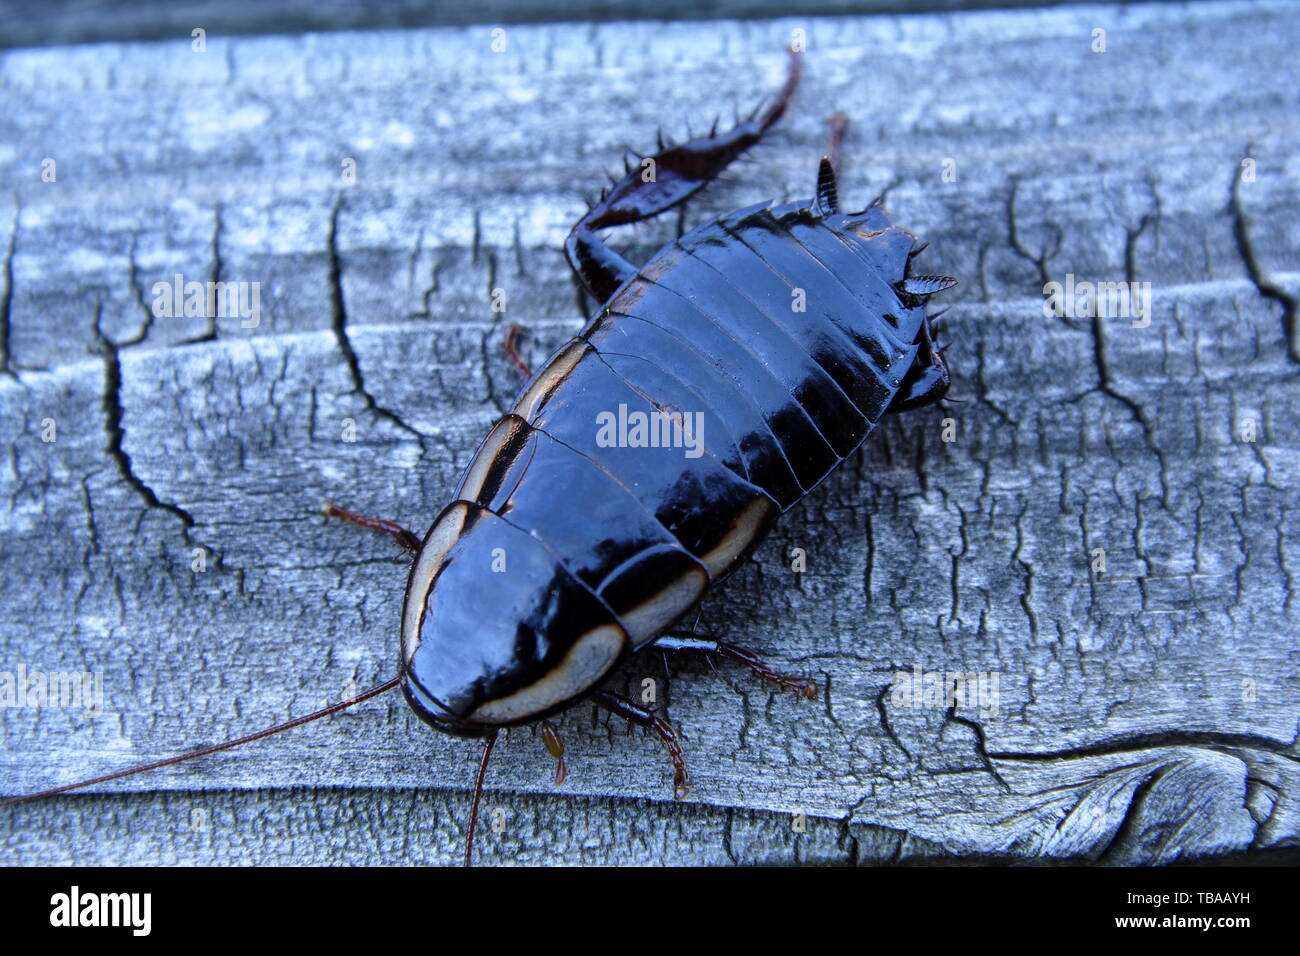 Chirrido australiano común Cockroach - Drymaplaneta communis Foto de stock